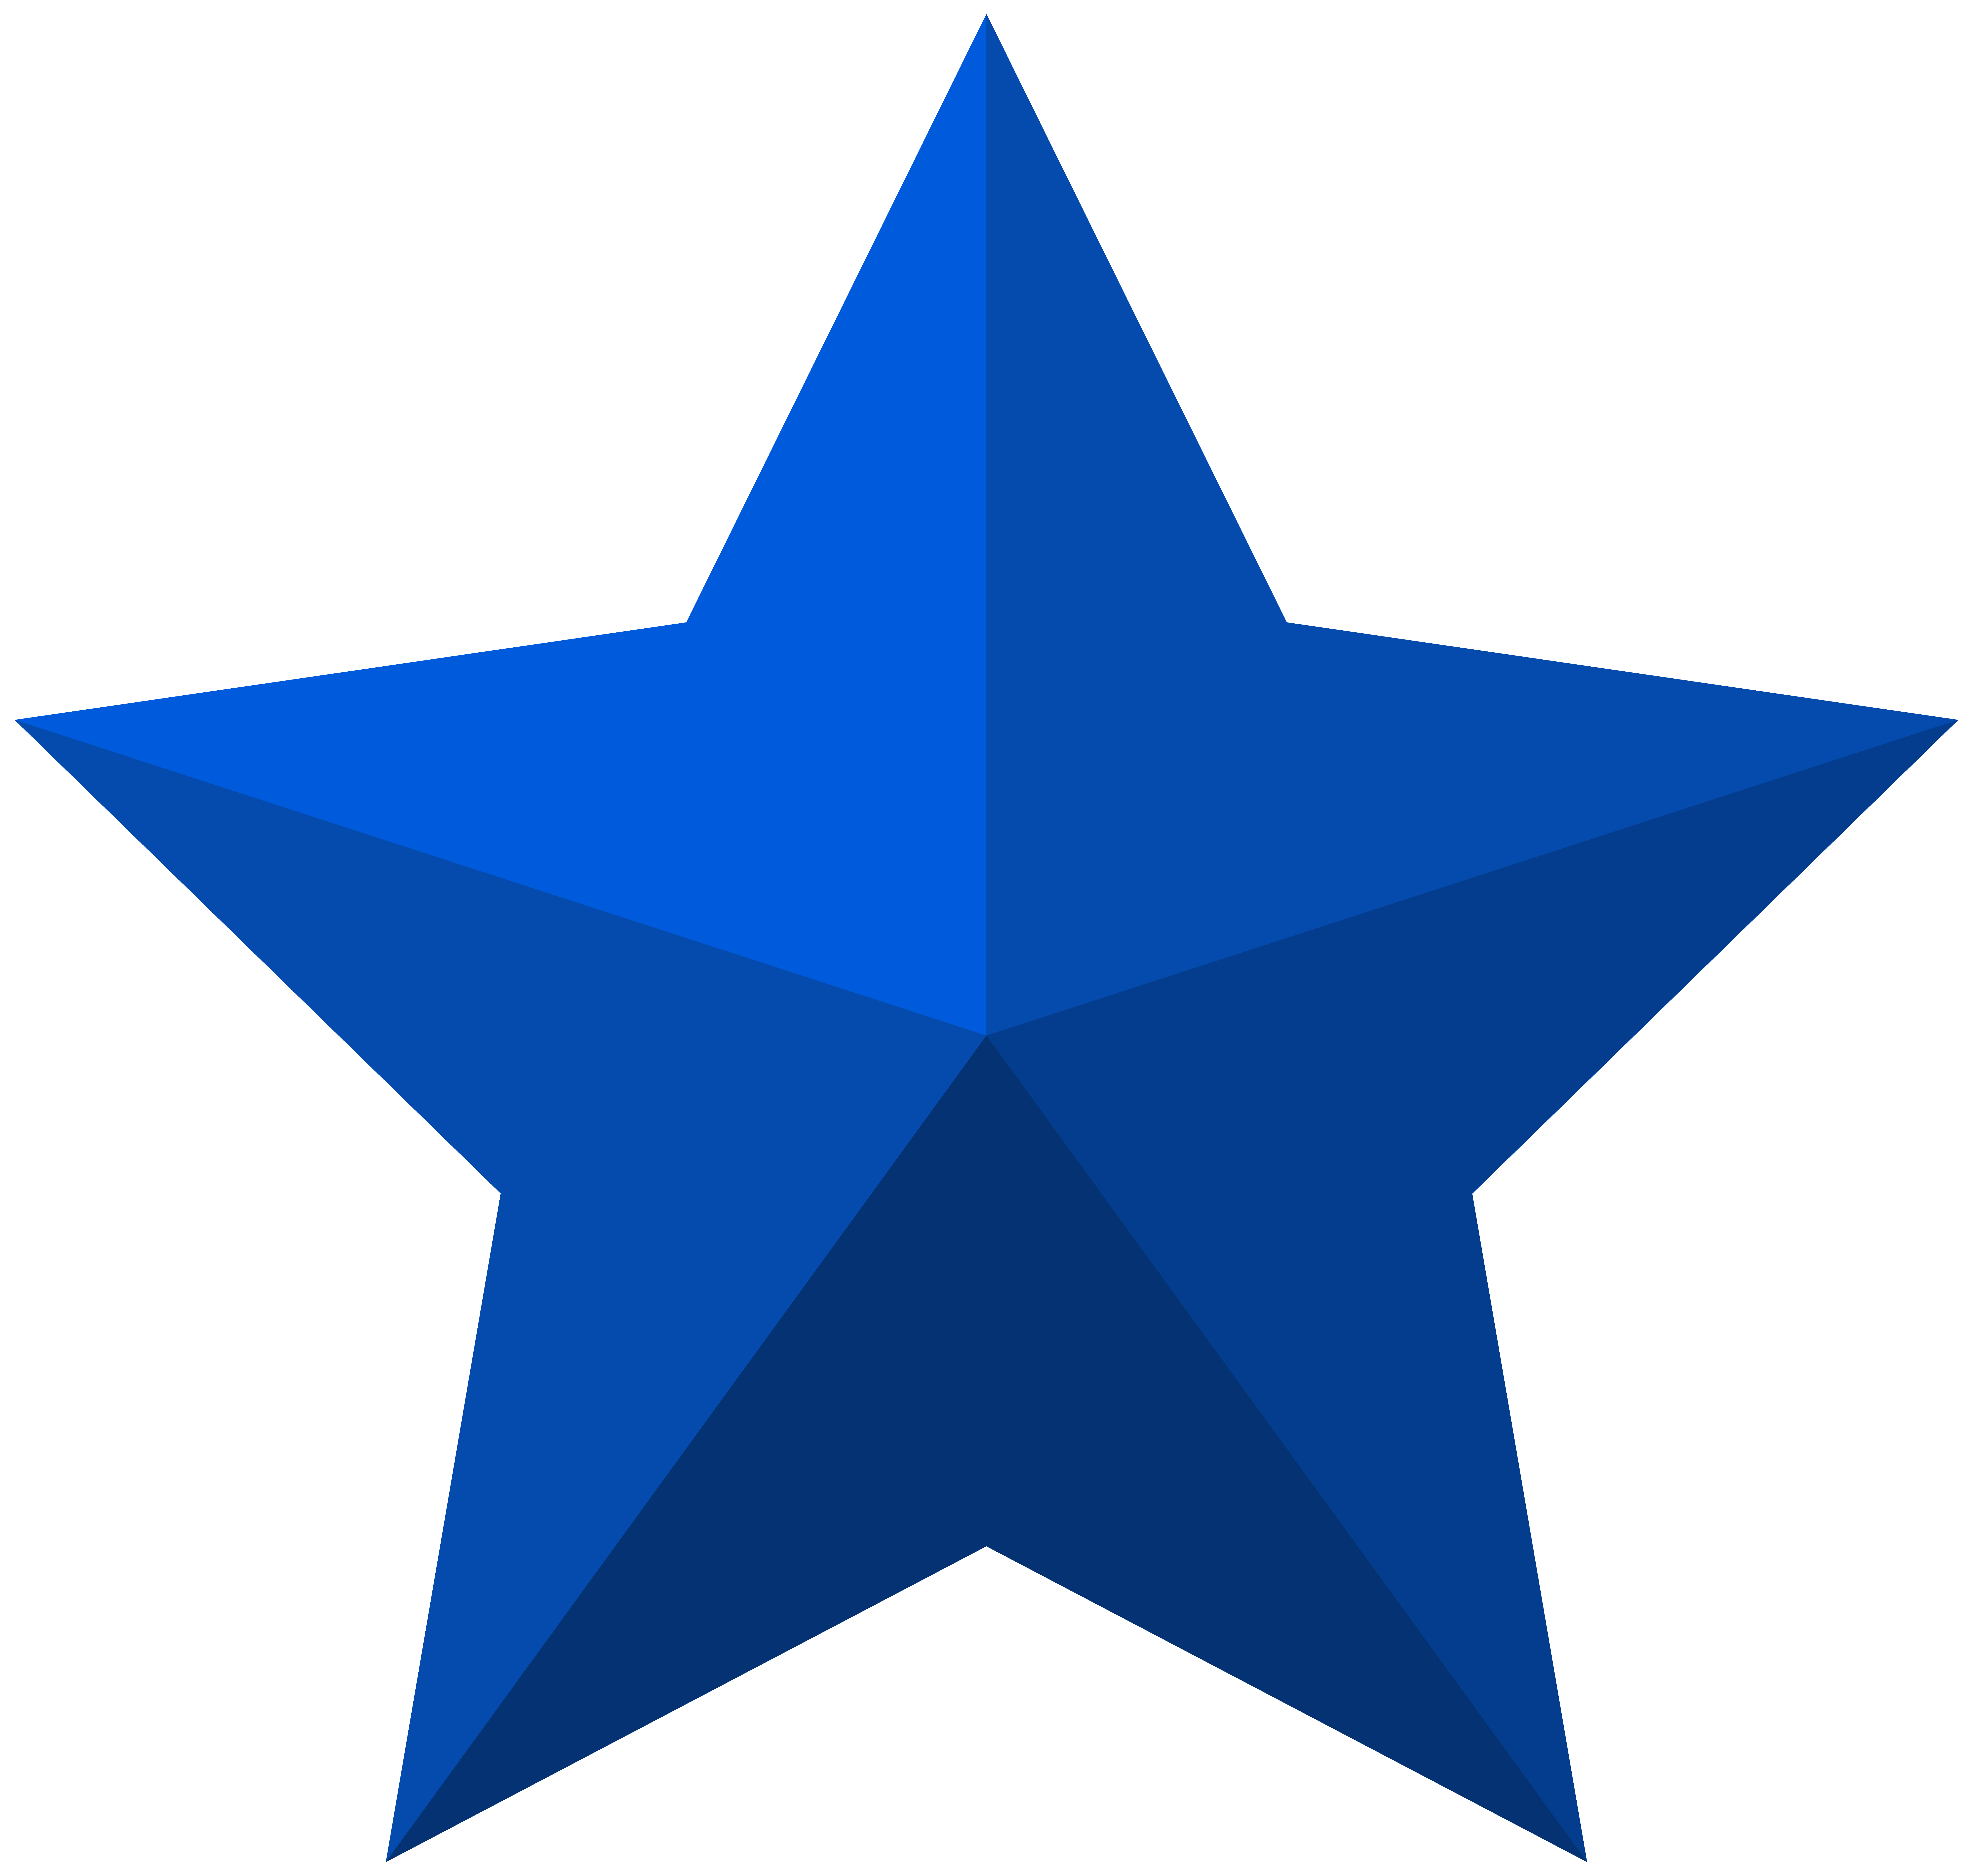 Blue Star PNG Clip Art Image